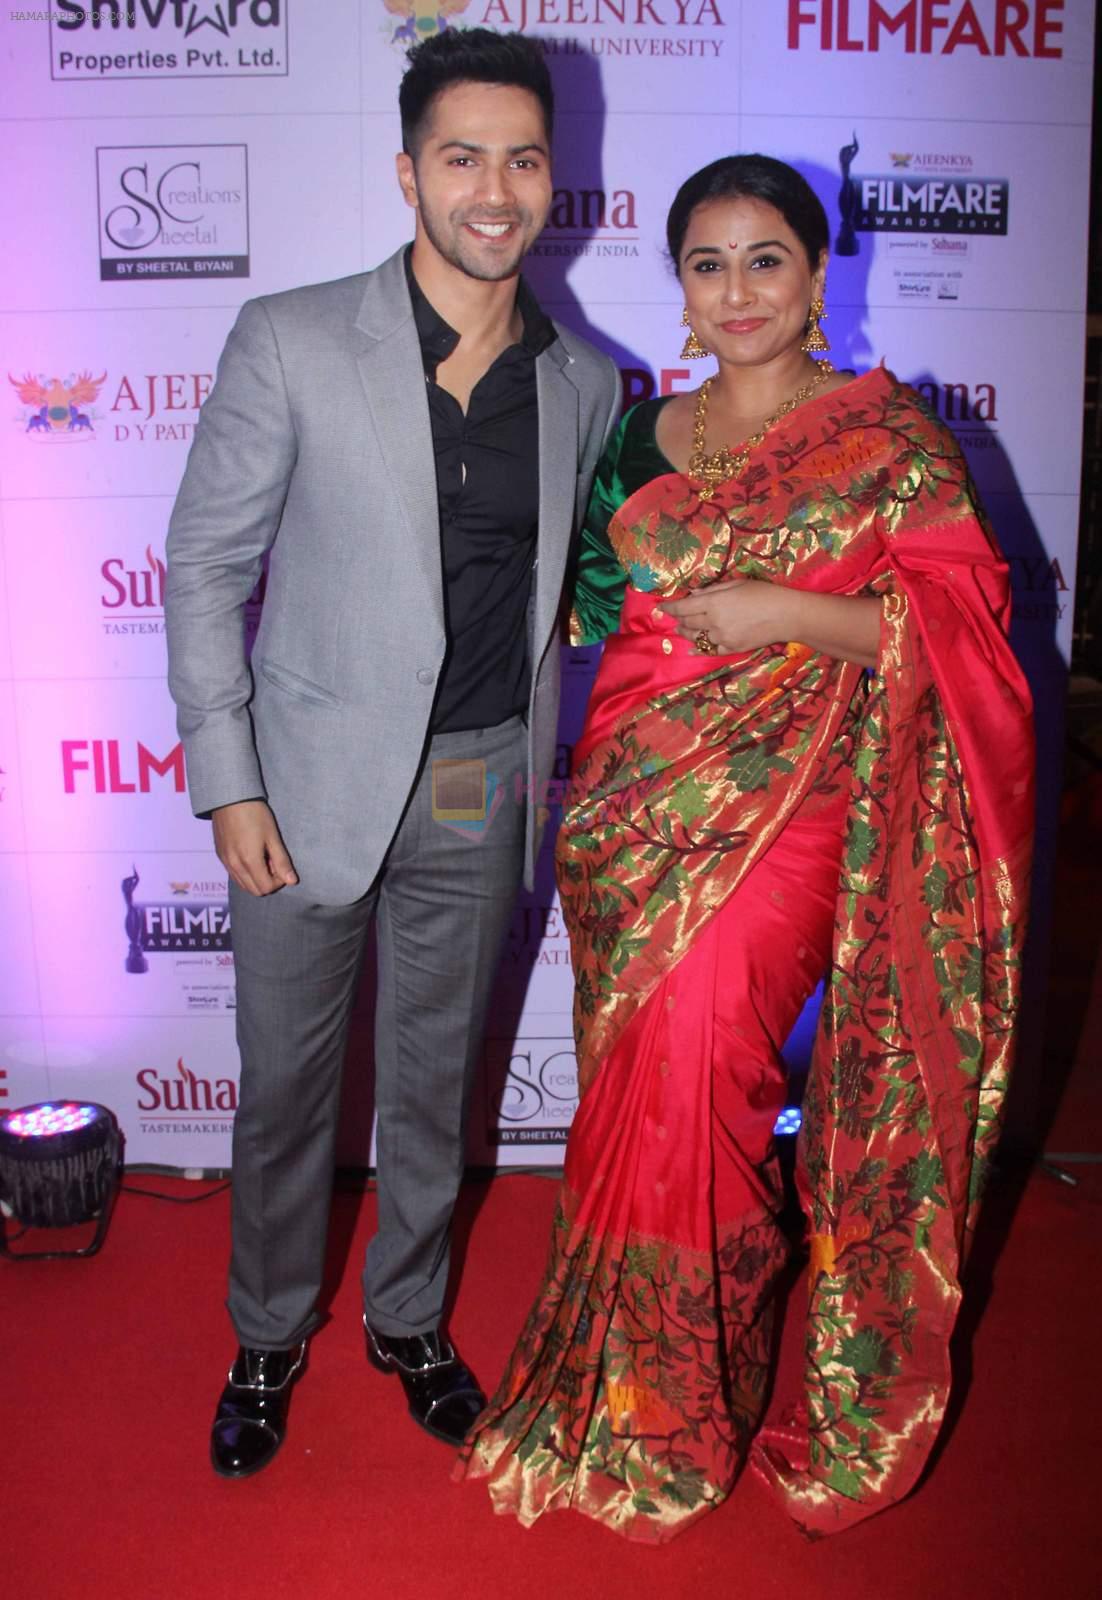 Varun Dhawan & Vidya Balan at the Red Carpet of _Ajeenkya DY Patil University Filmfare Awards